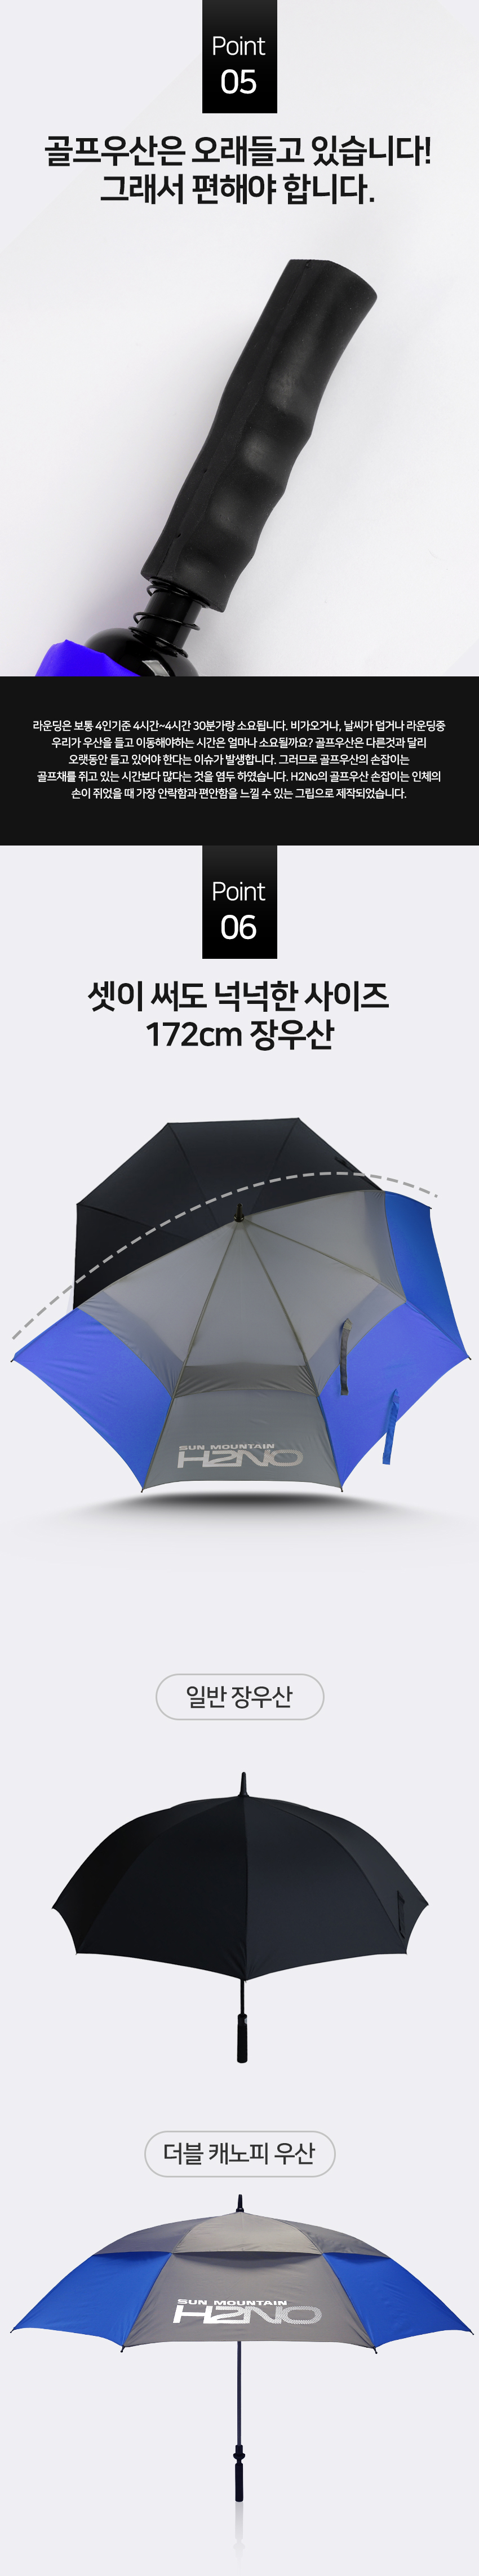 sunmountail_autoopen_double_canopy_umbrella_detail_05.jpg